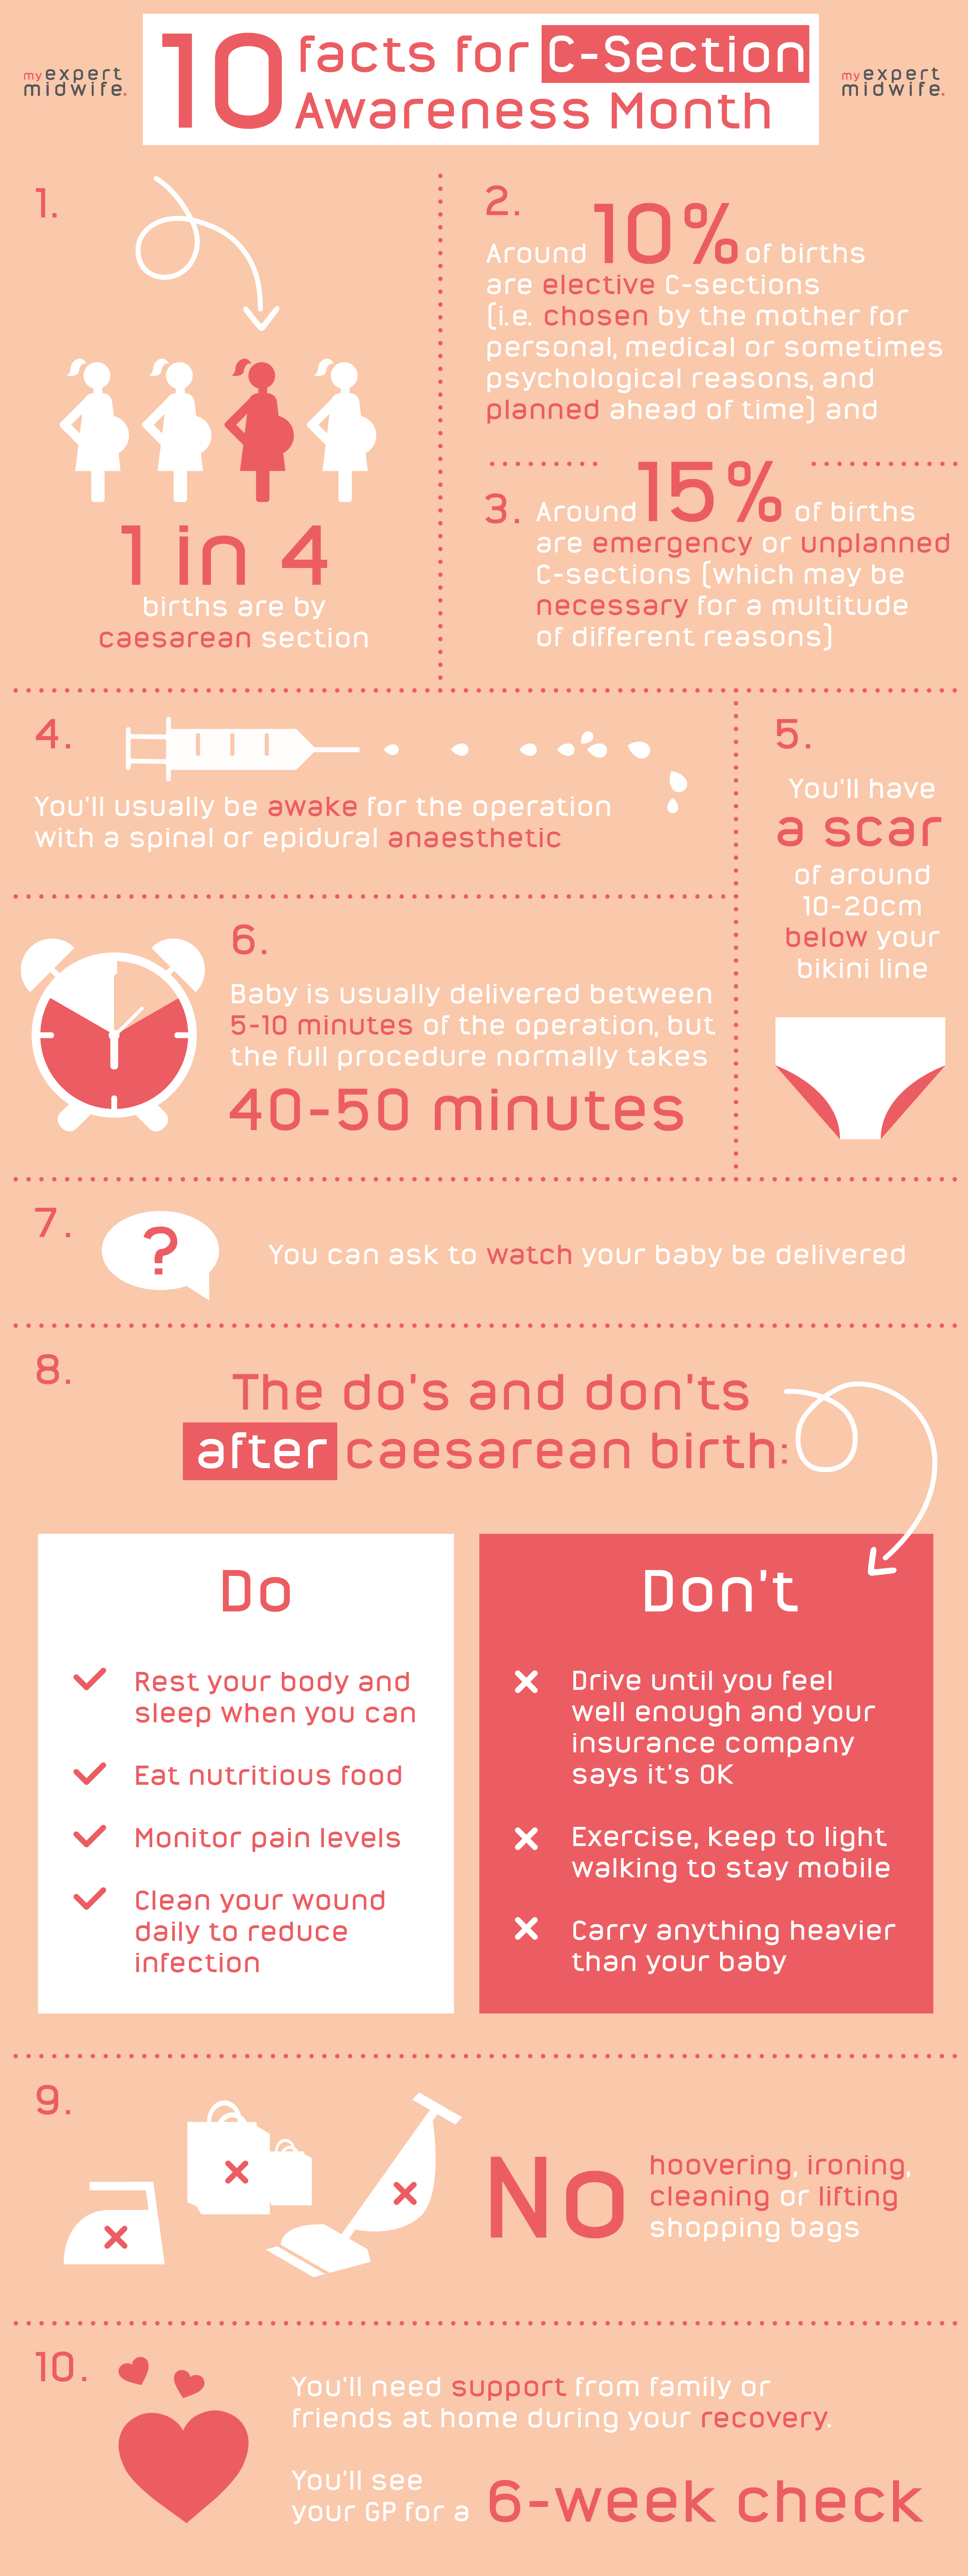 MEM C-section Awareness Month Infographic